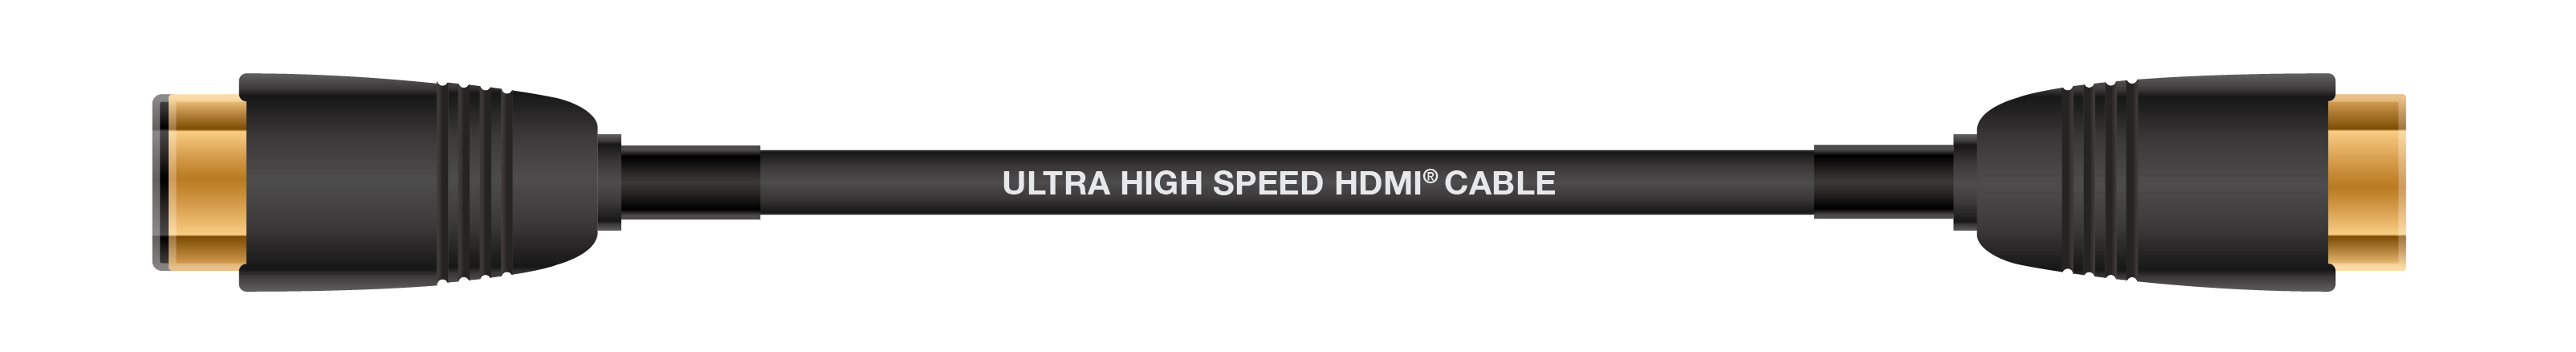 HDMI_BlackCable-01